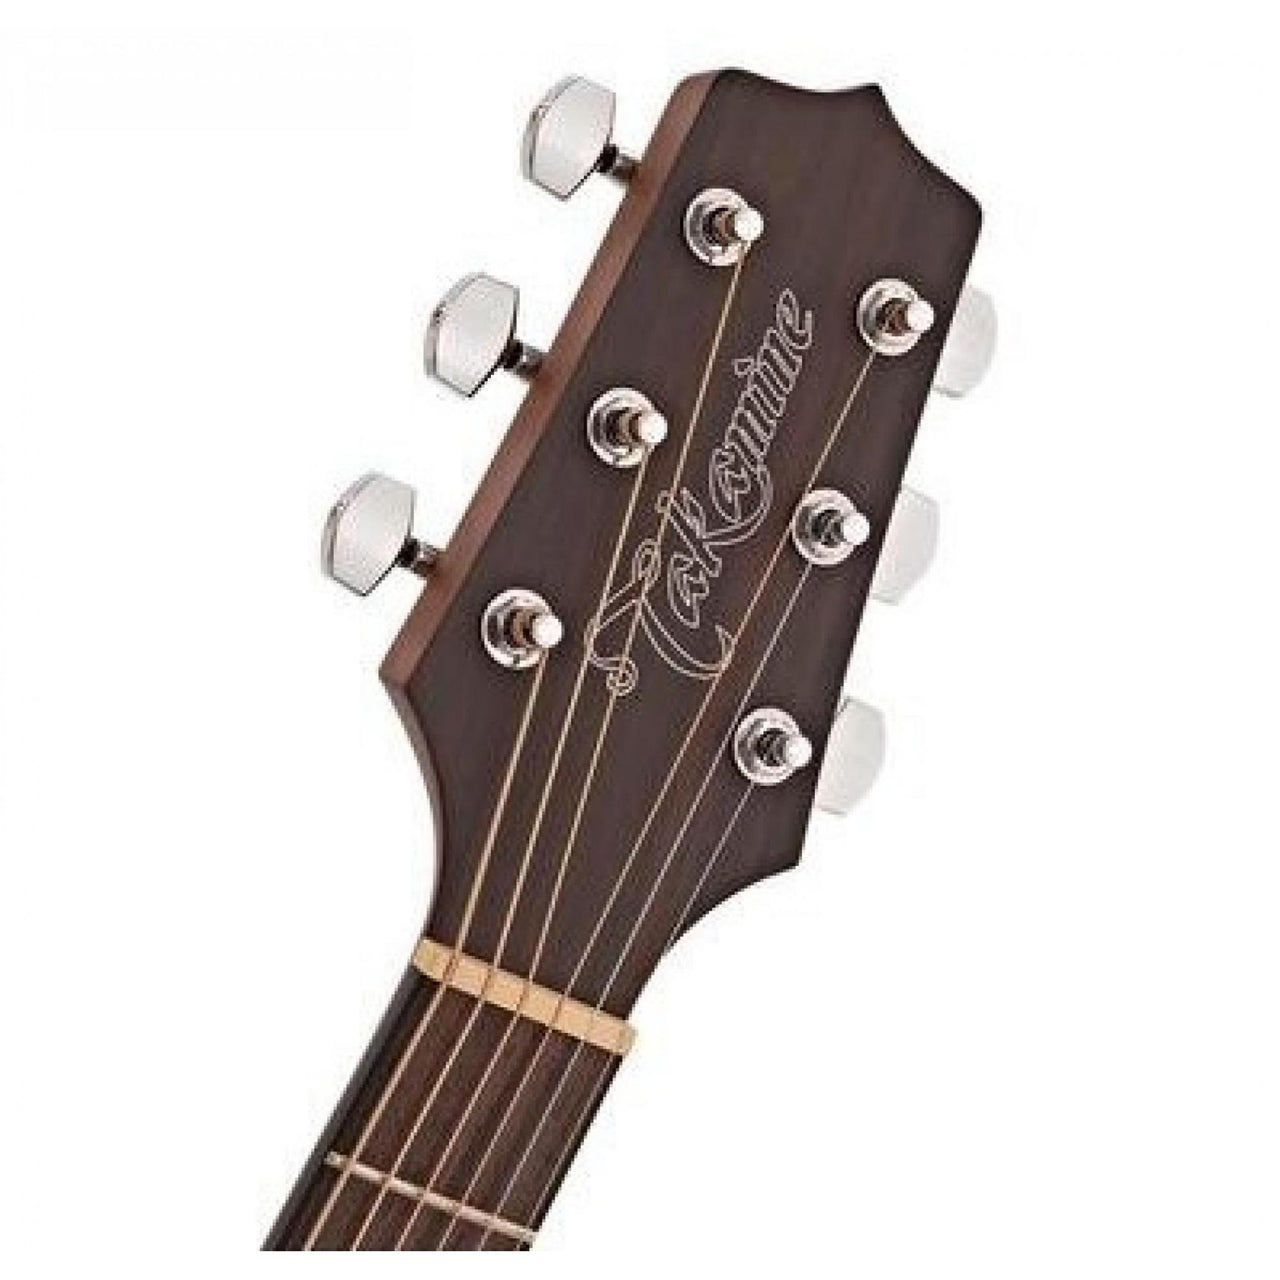 Guitarra Takamine Electroacustica Cdas. Acero, Gd11mce-ns